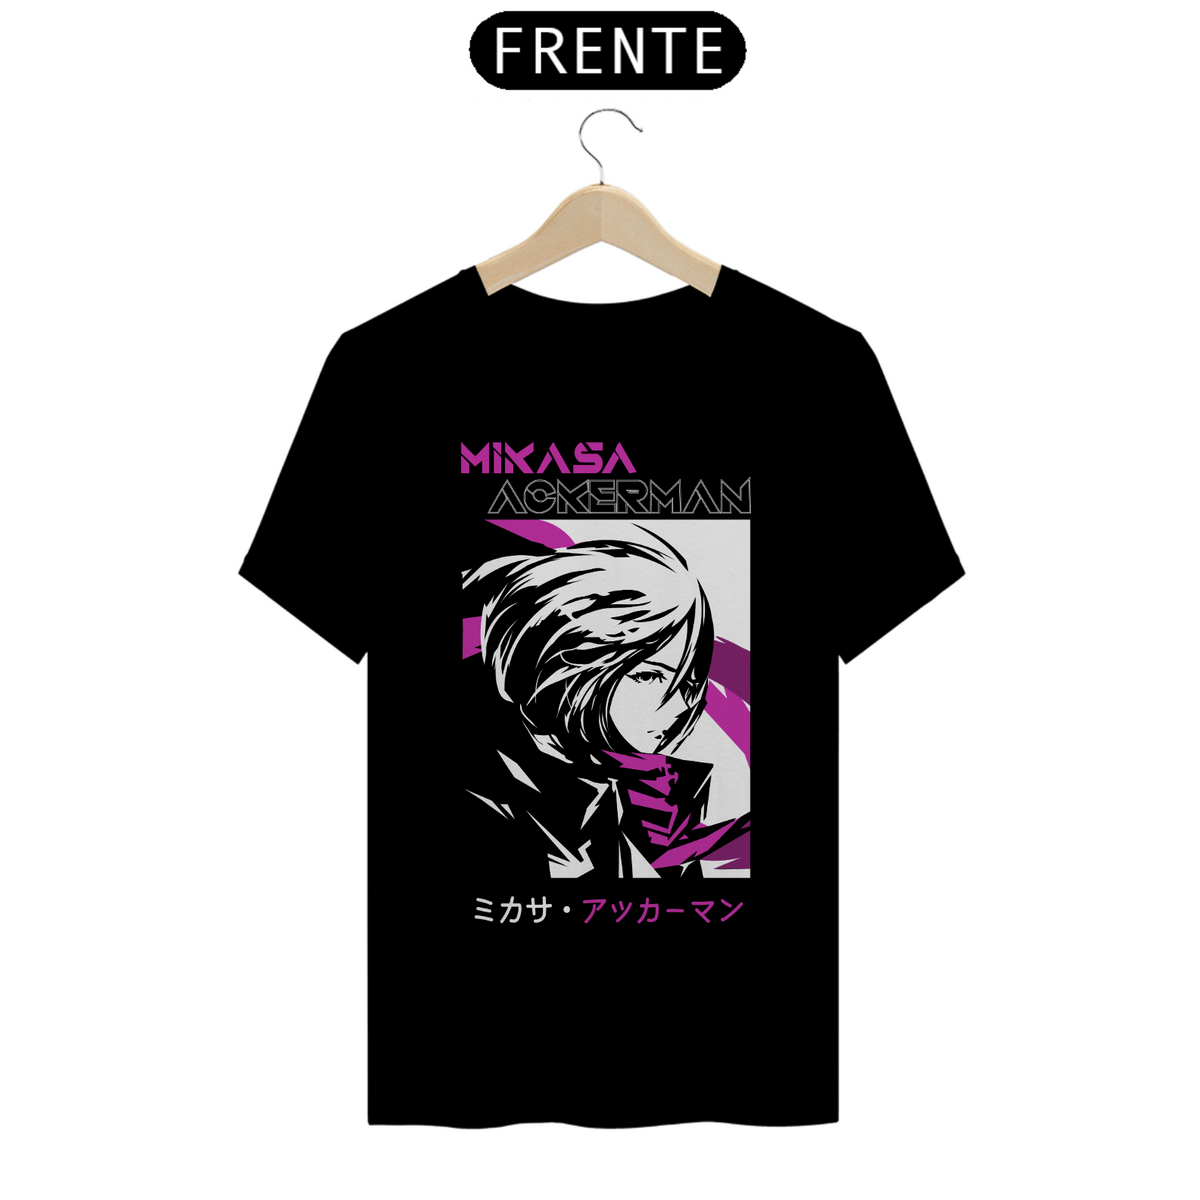 Nome do produto: T-shirt - Mikasa Arkerman Attack on Titan